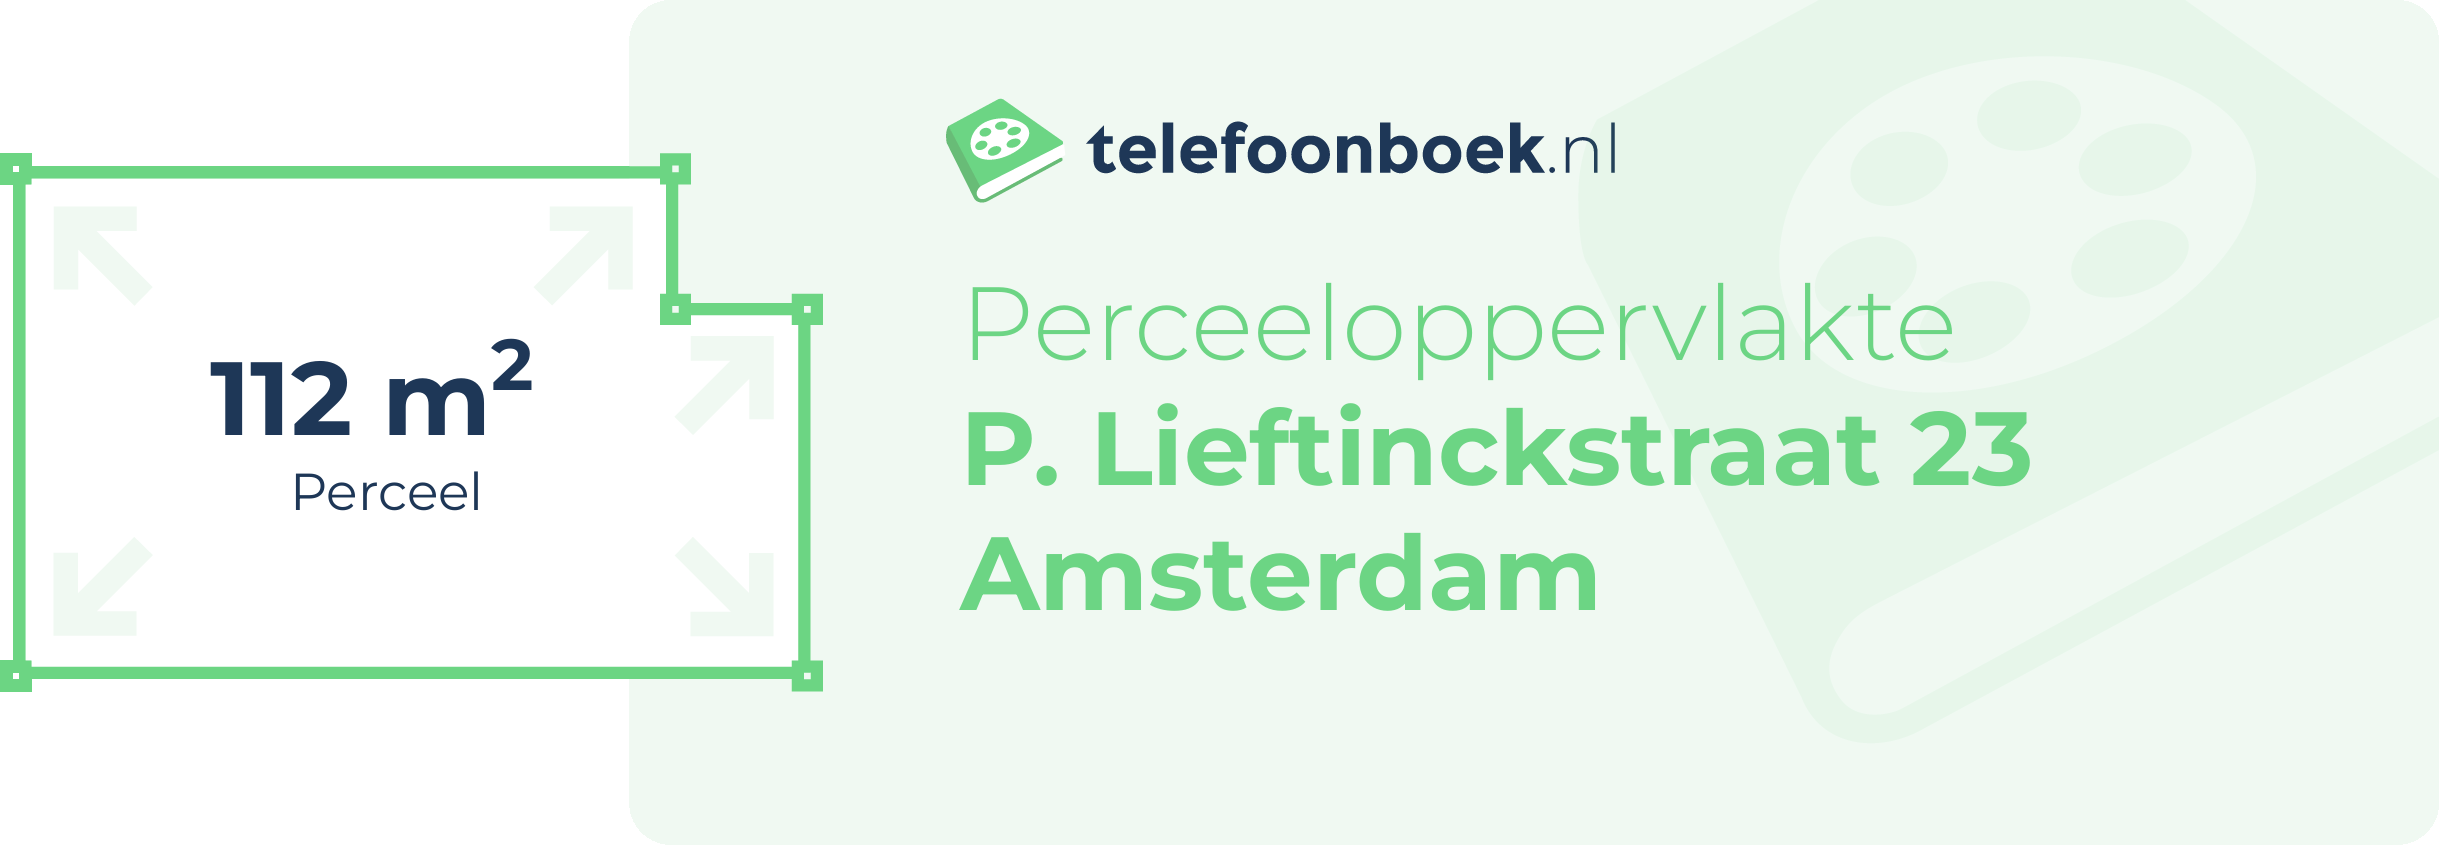 Perceeloppervlakte P. Lieftinckstraat 23 Amsterdam